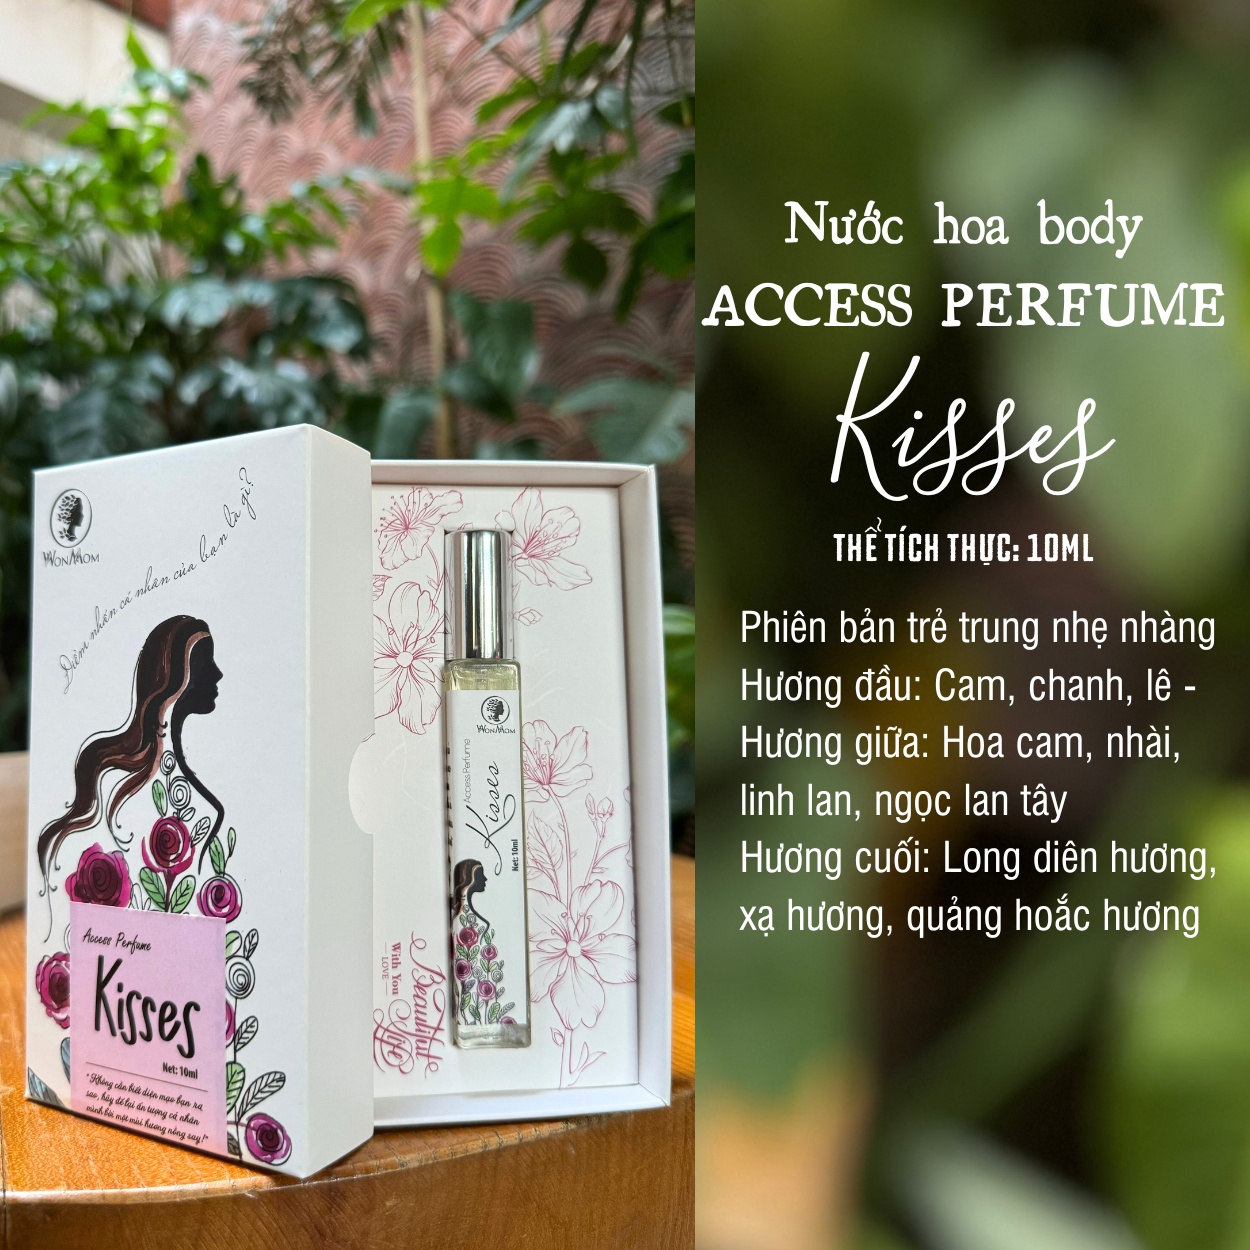 Nước hoa toàn thân Access perfume - Kisses